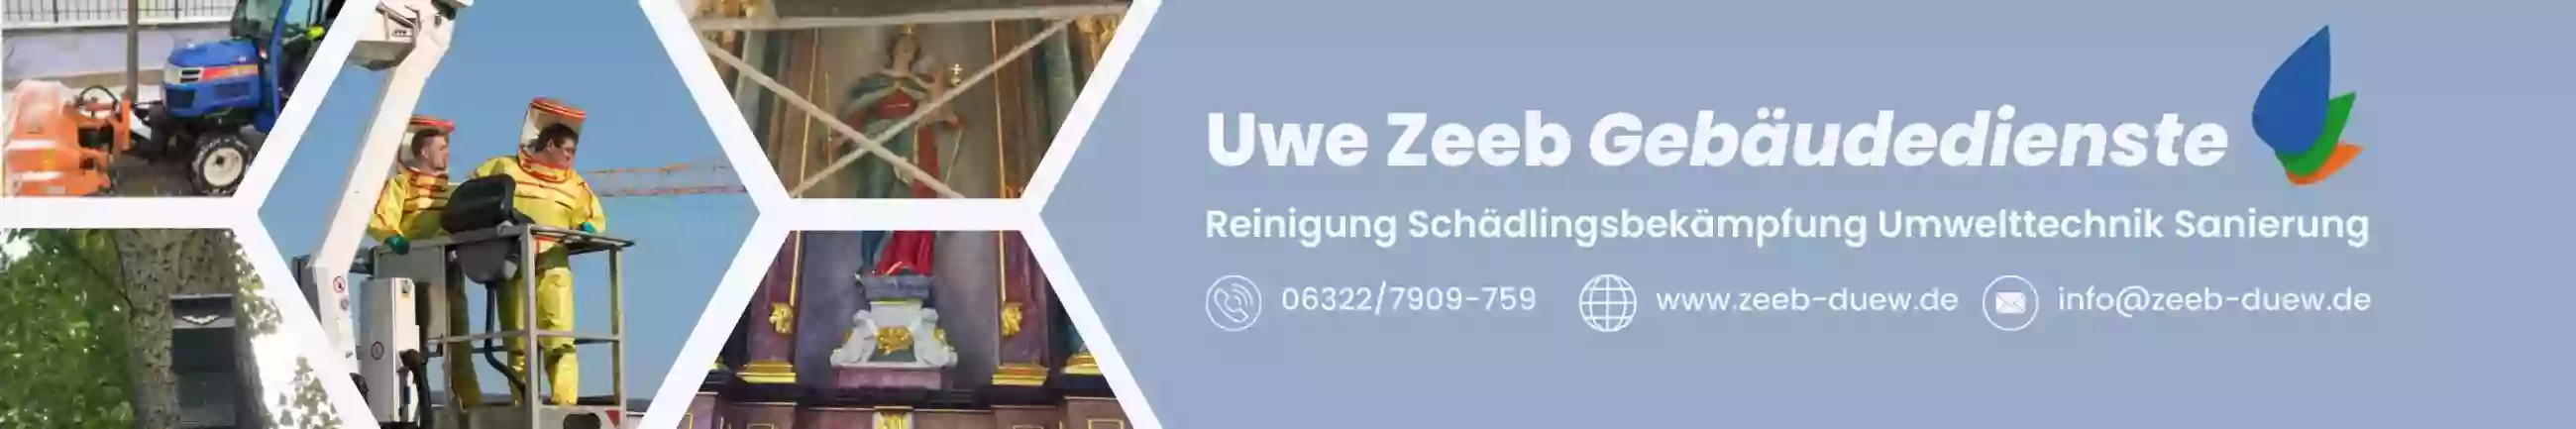 Uwe Zeeb Gebäudedienste & Umwelttechnik